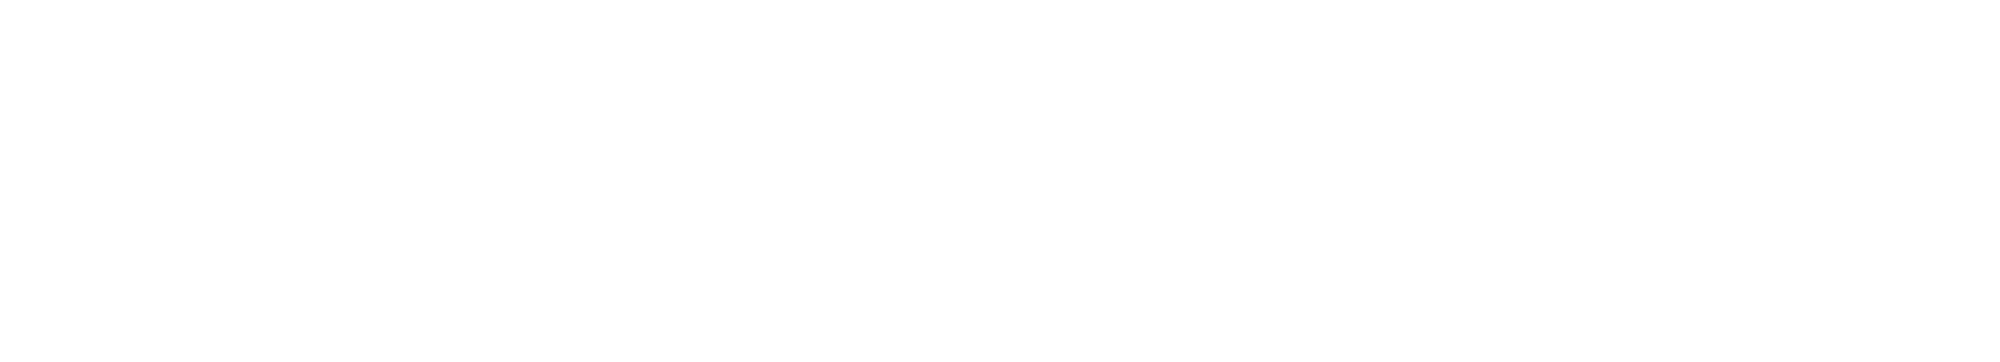 House Hunters Renovation logo